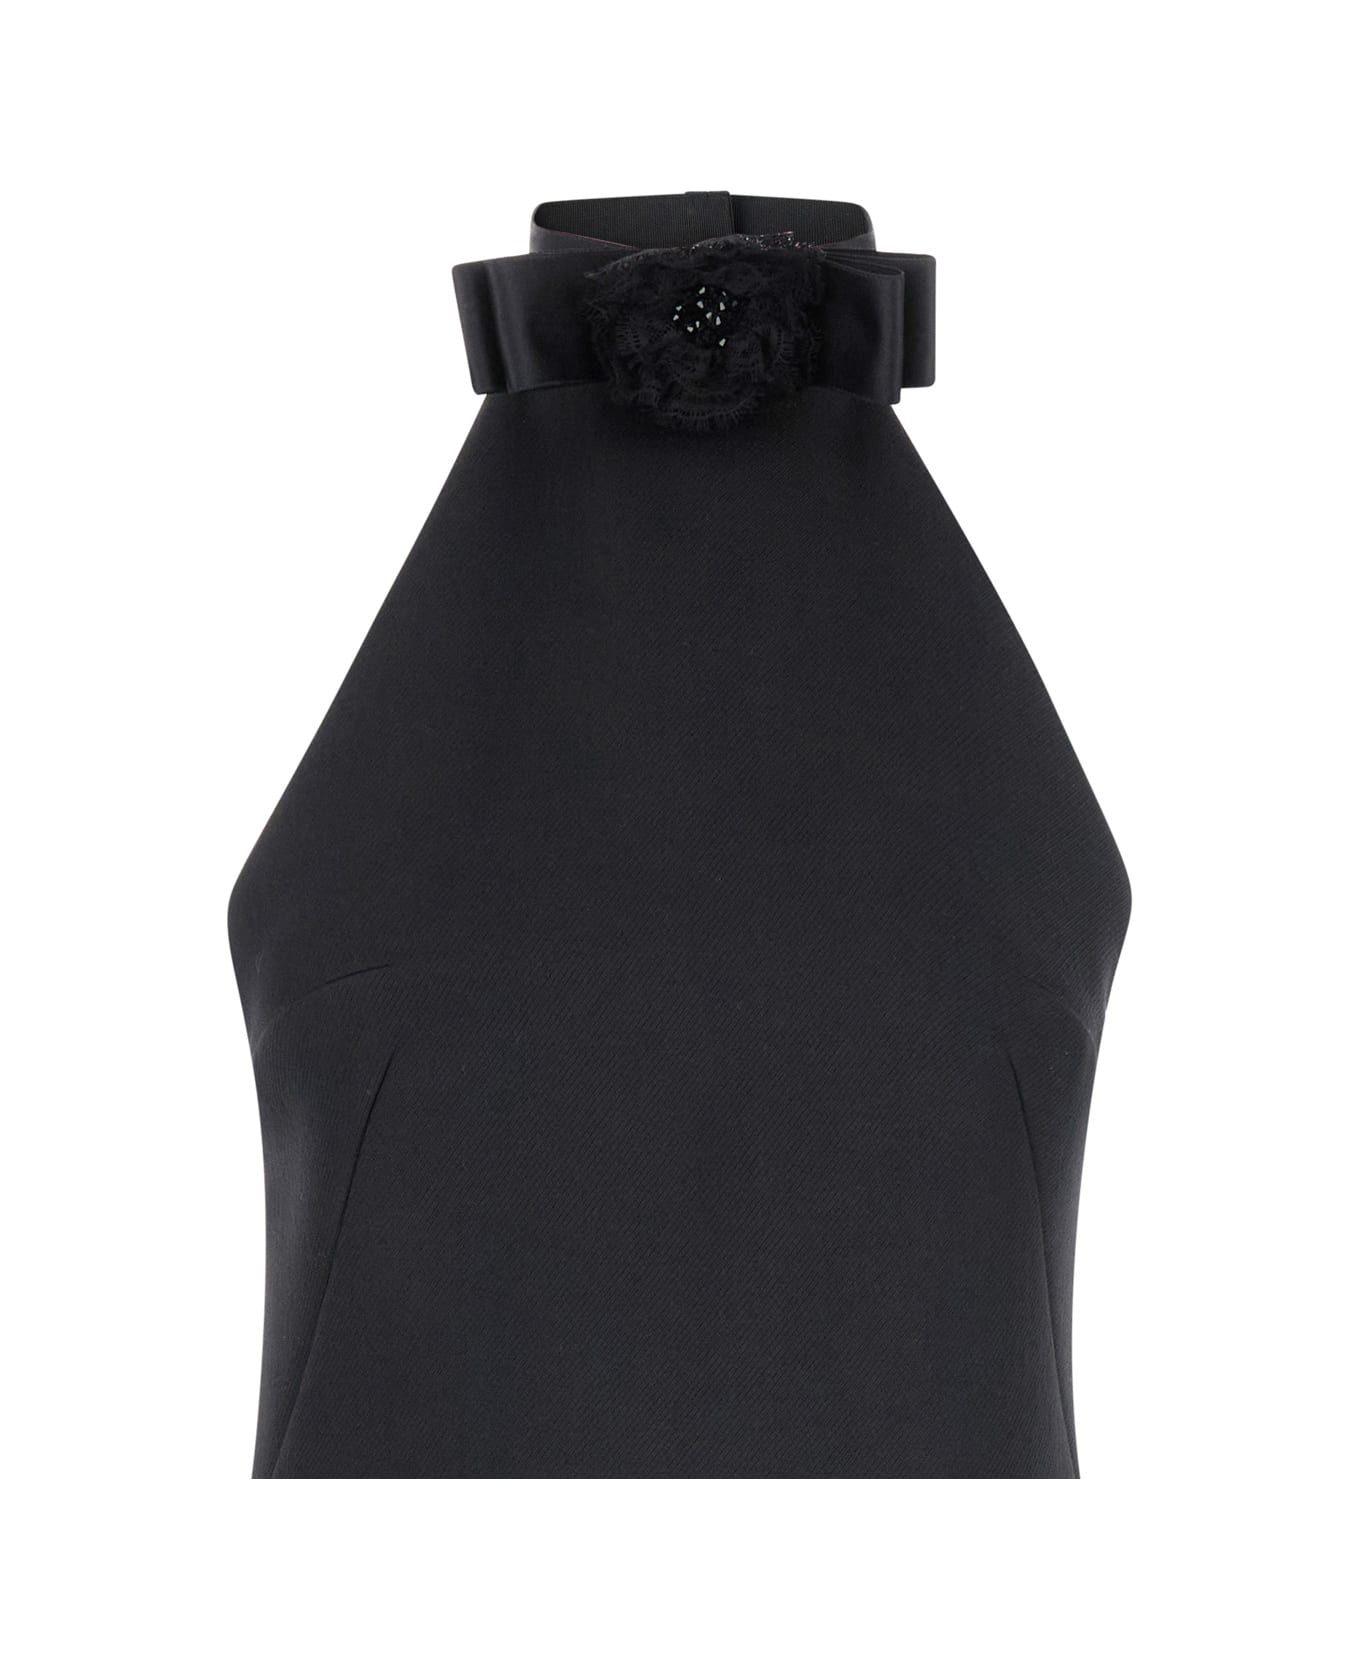 Dolce & Gabbana Black Mini Dress With Floral Detail In Wool Woman - Black